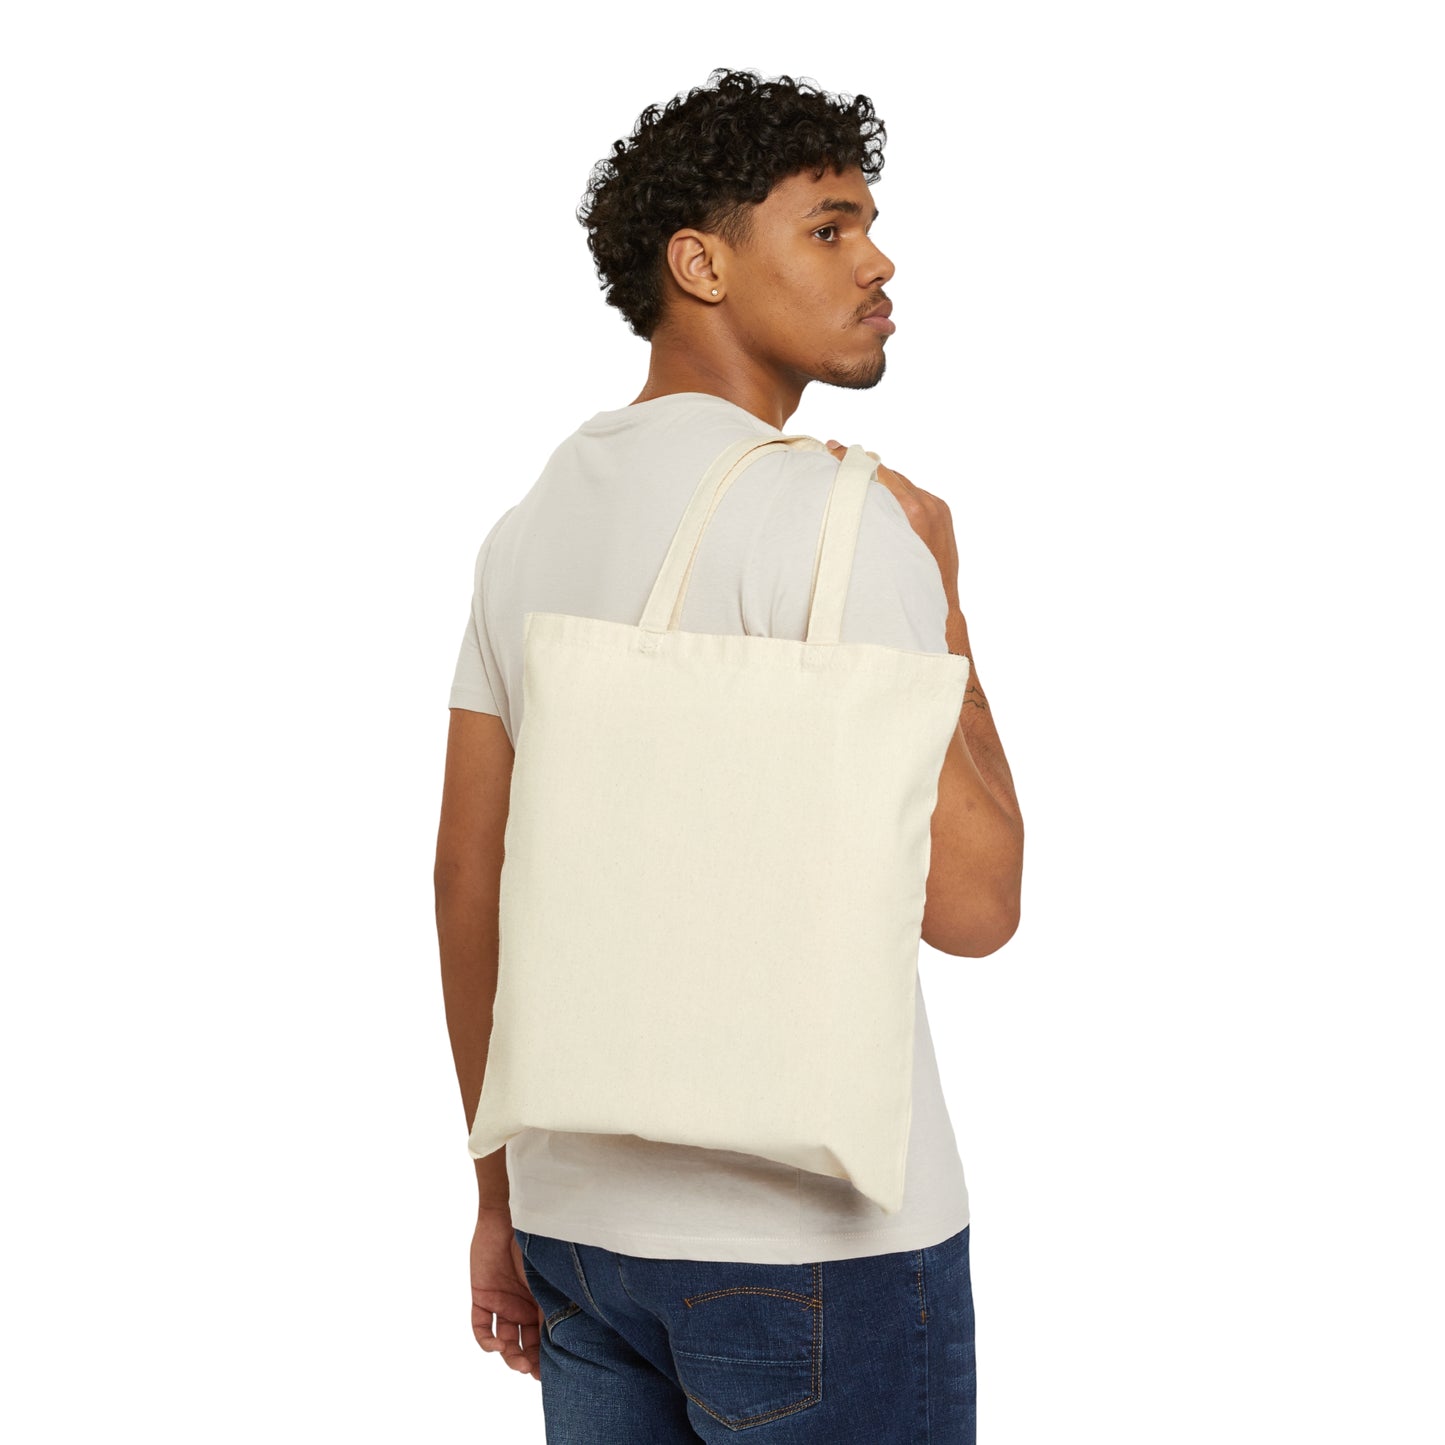 CFF Cotton Canvas Tote Bag